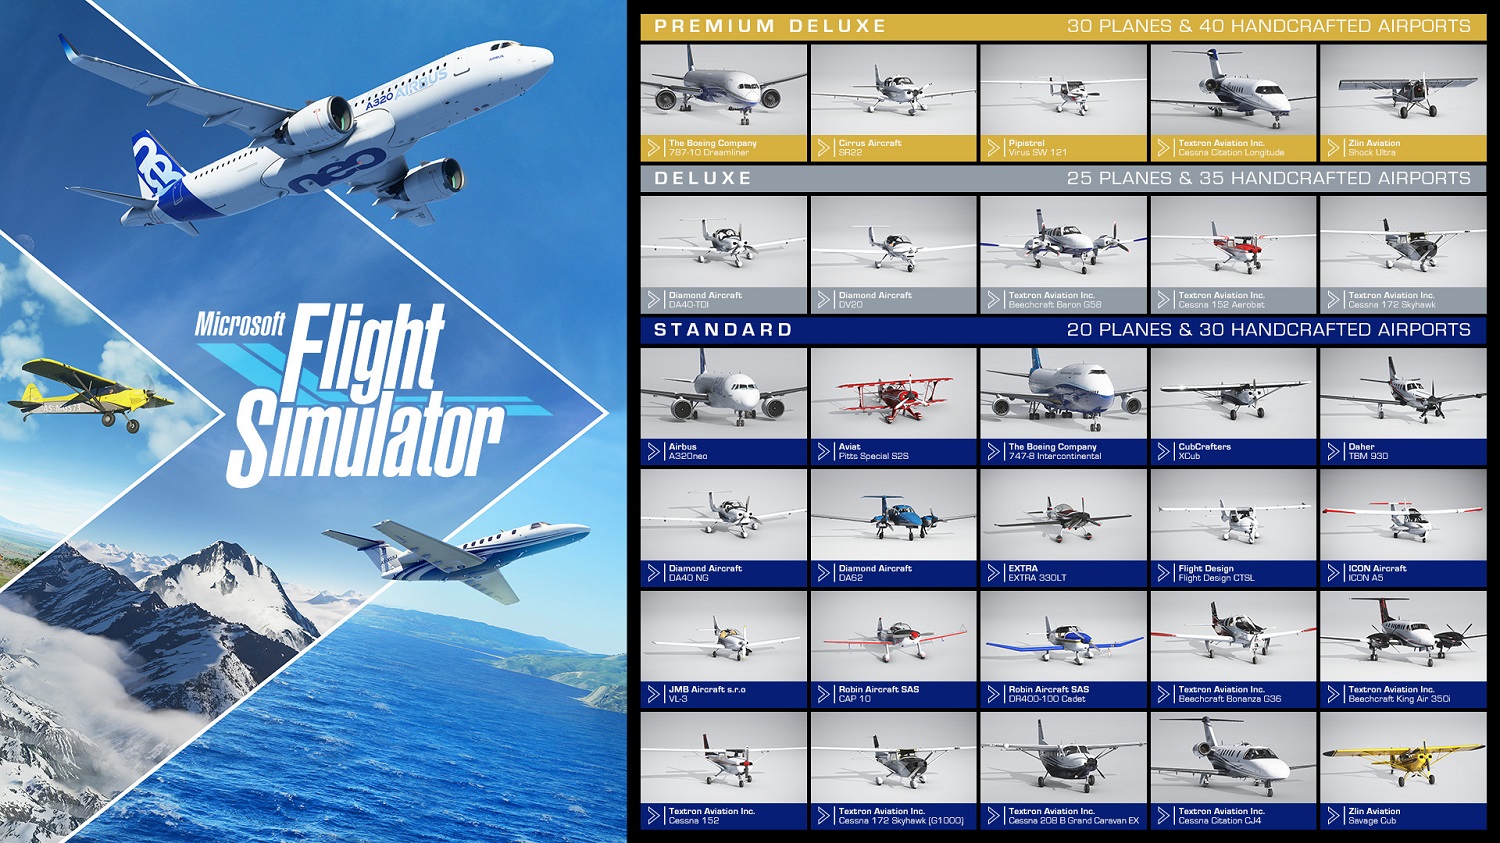 flight simulator pc games 2014